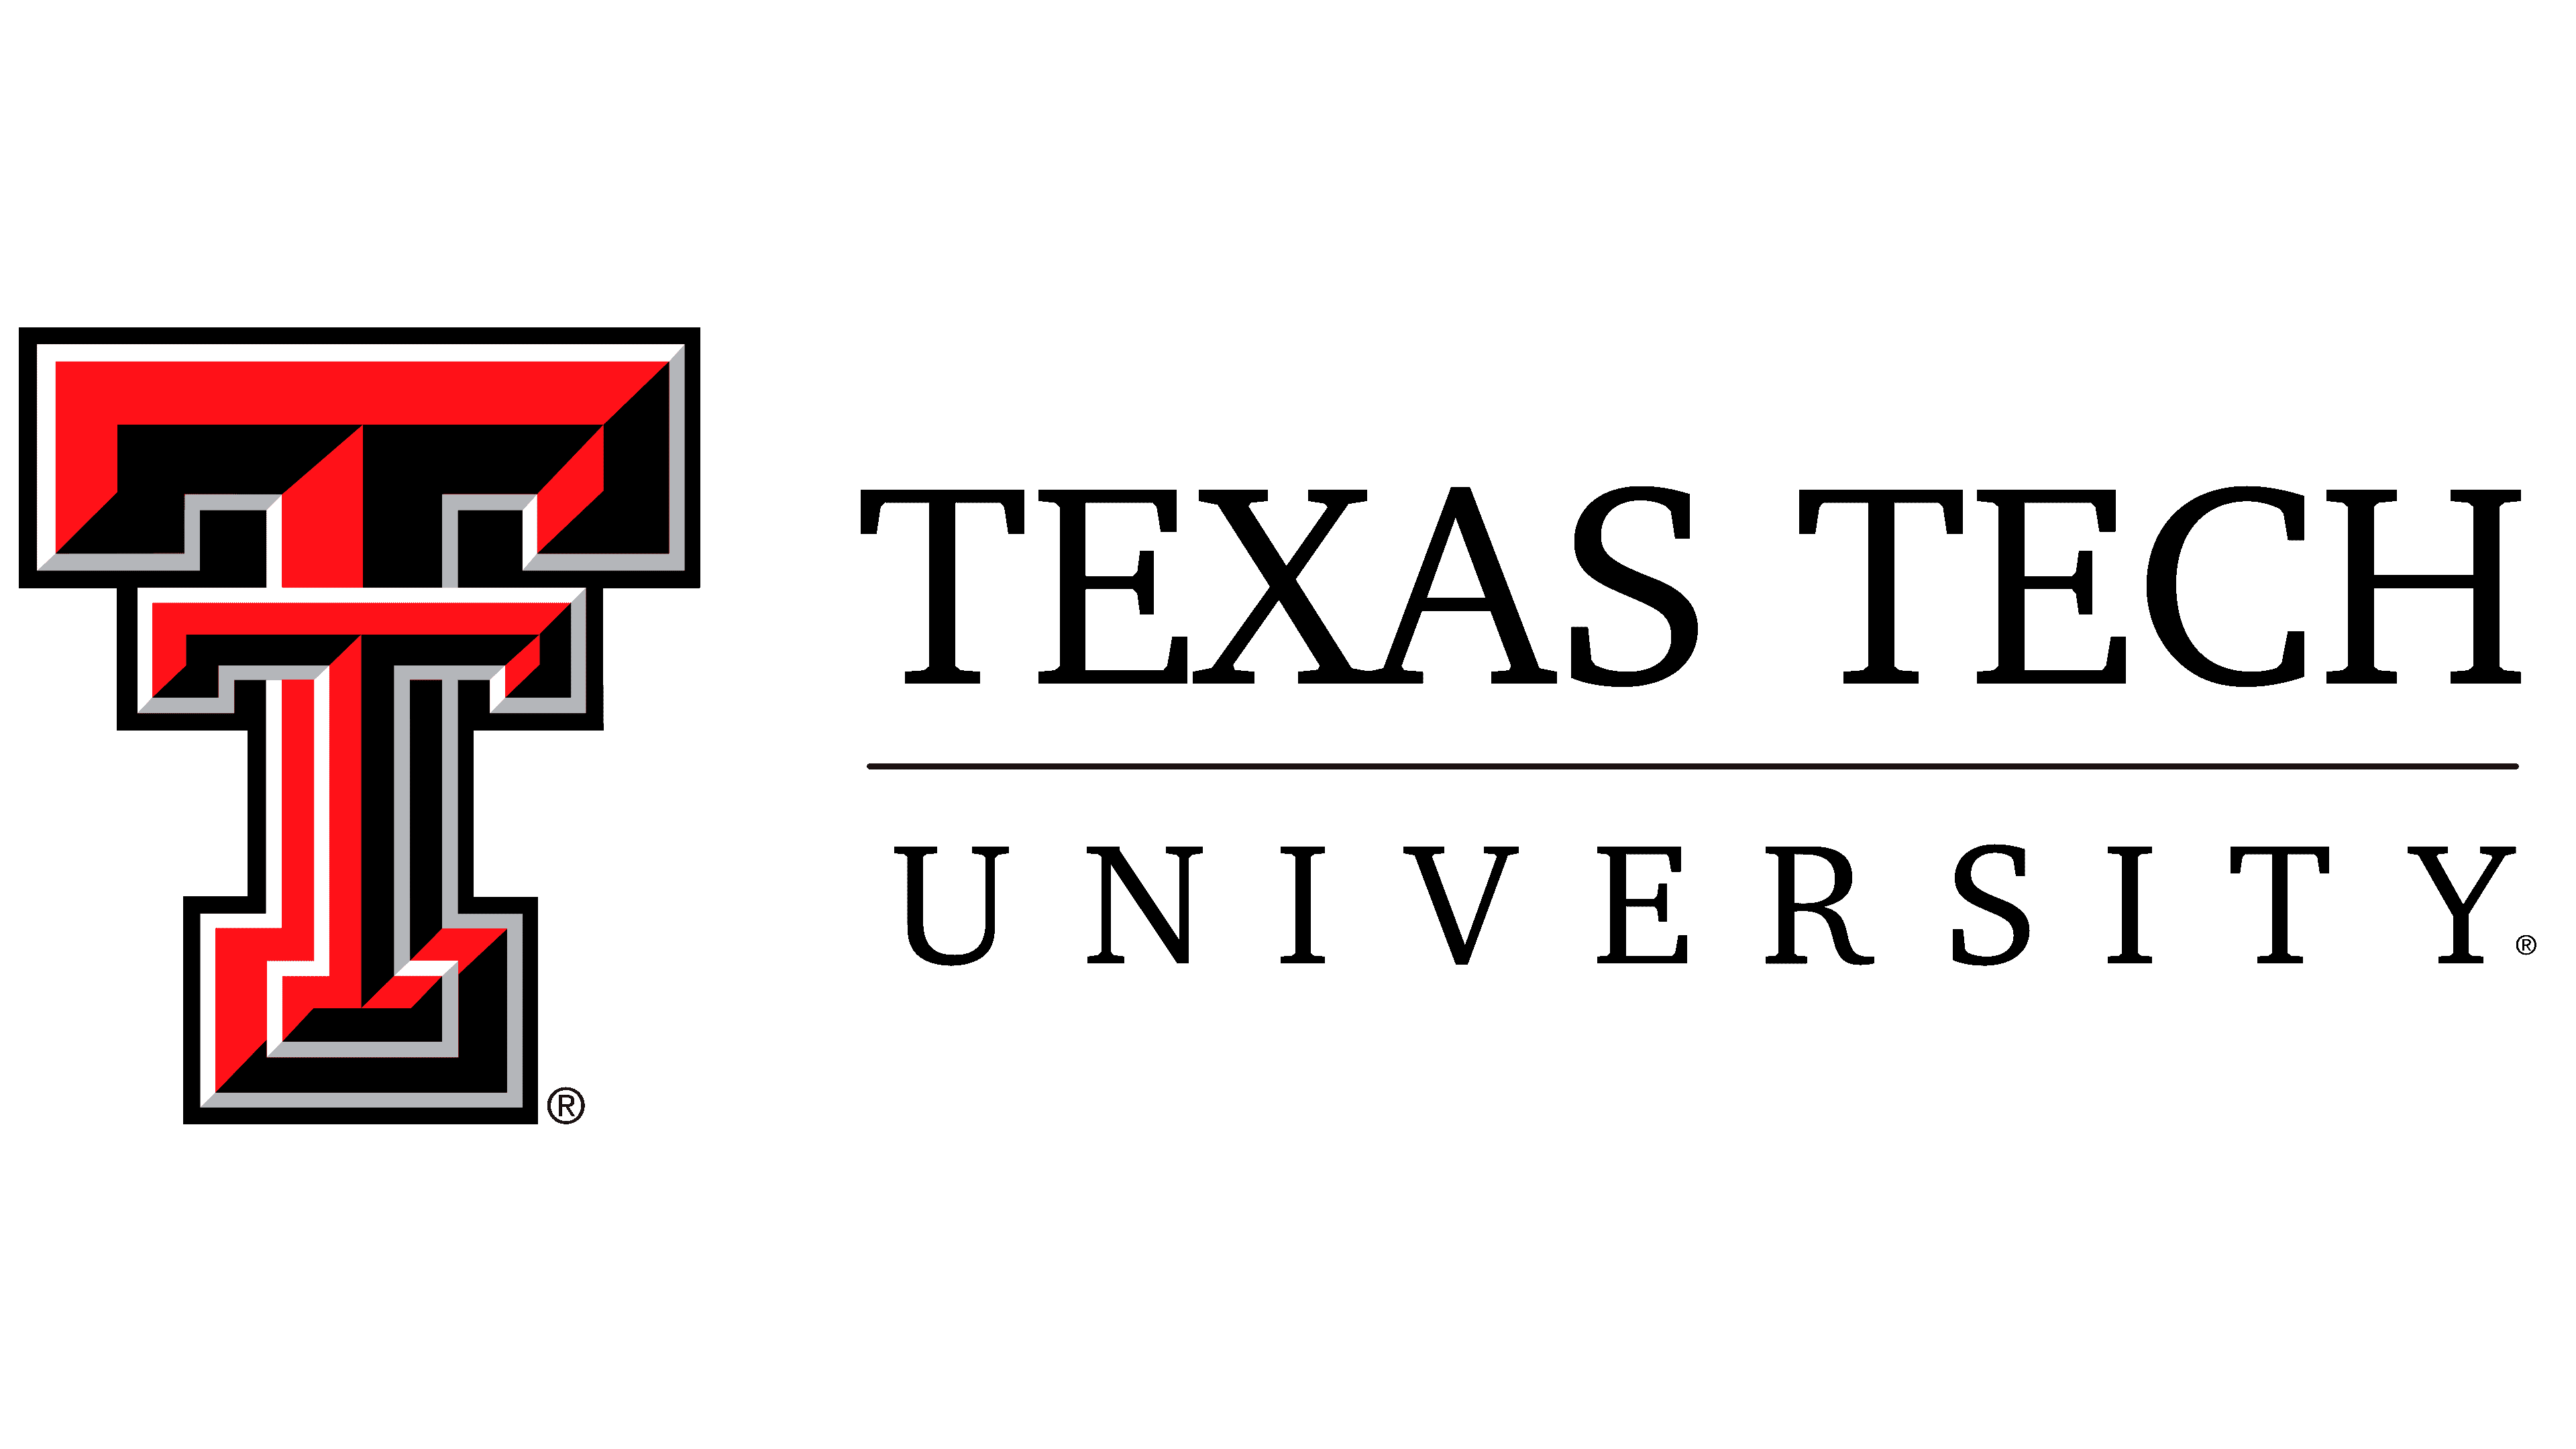 Texas Tech university